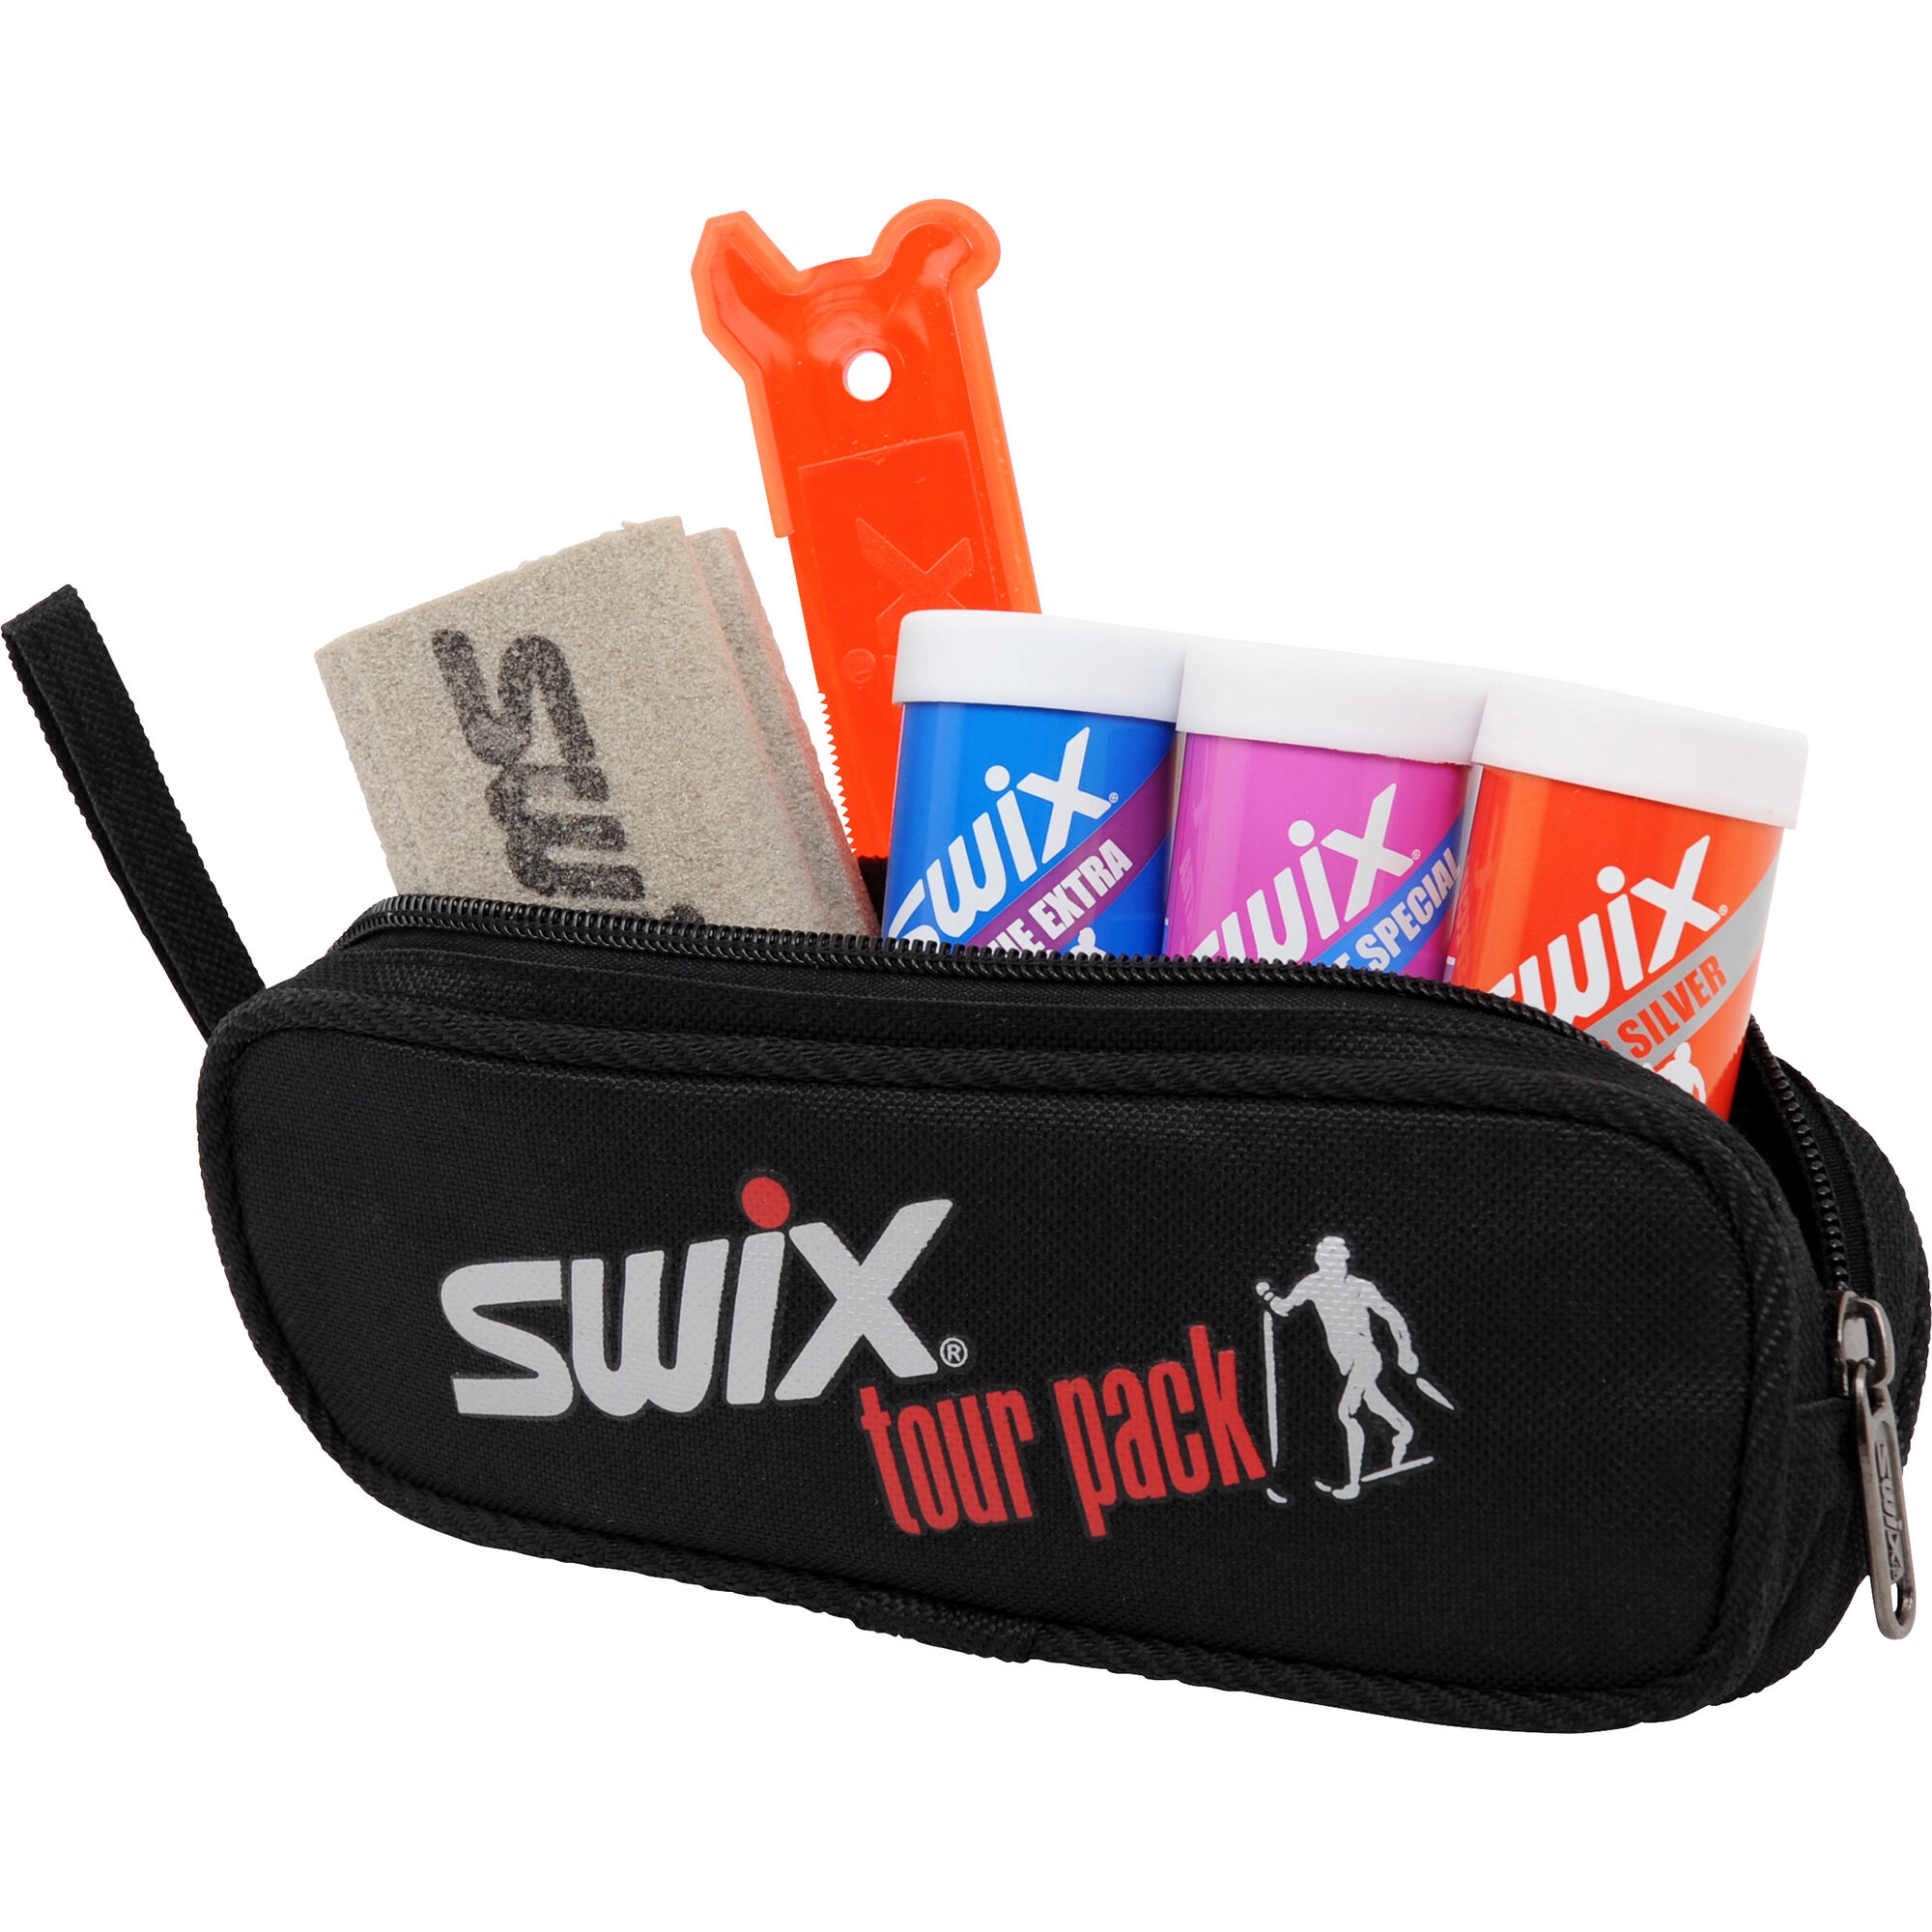 Swix P20G XC Tour pack standard-0